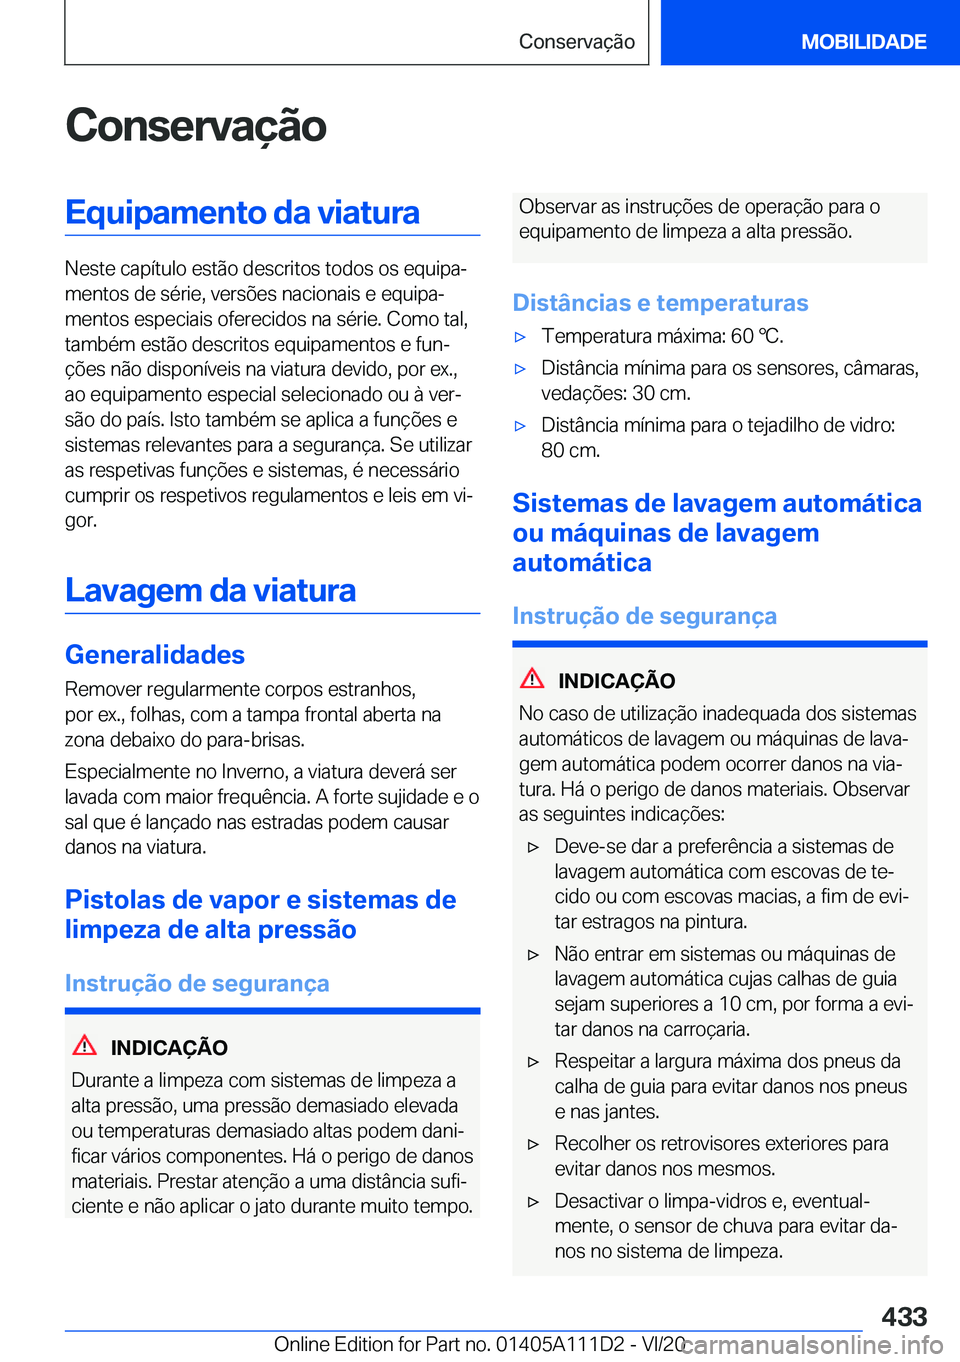 BMW 3 SERIES SEDAN PLUG-IN HYBRID 2021  Manual do condutor (in Portuguese) �C�o�n�s�e�r�v�a�